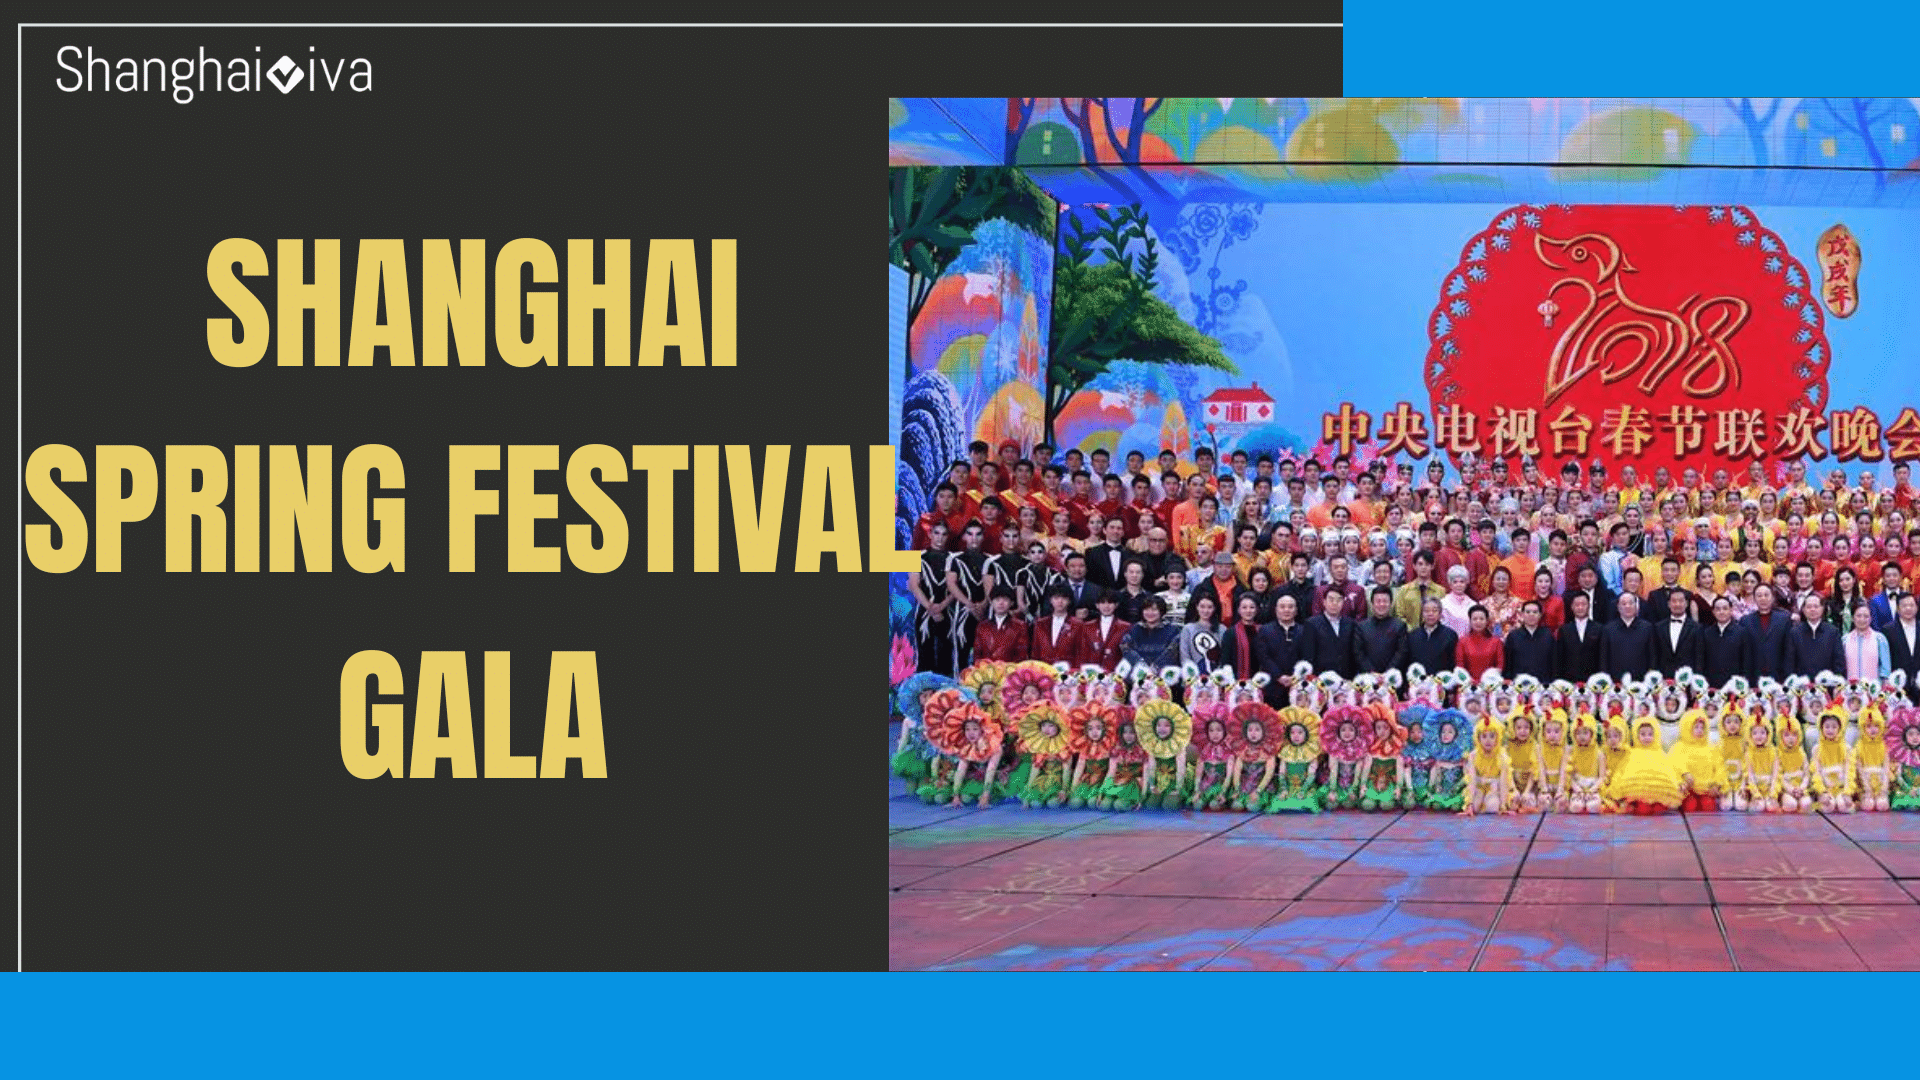 Shanghai Spring Festival Gala